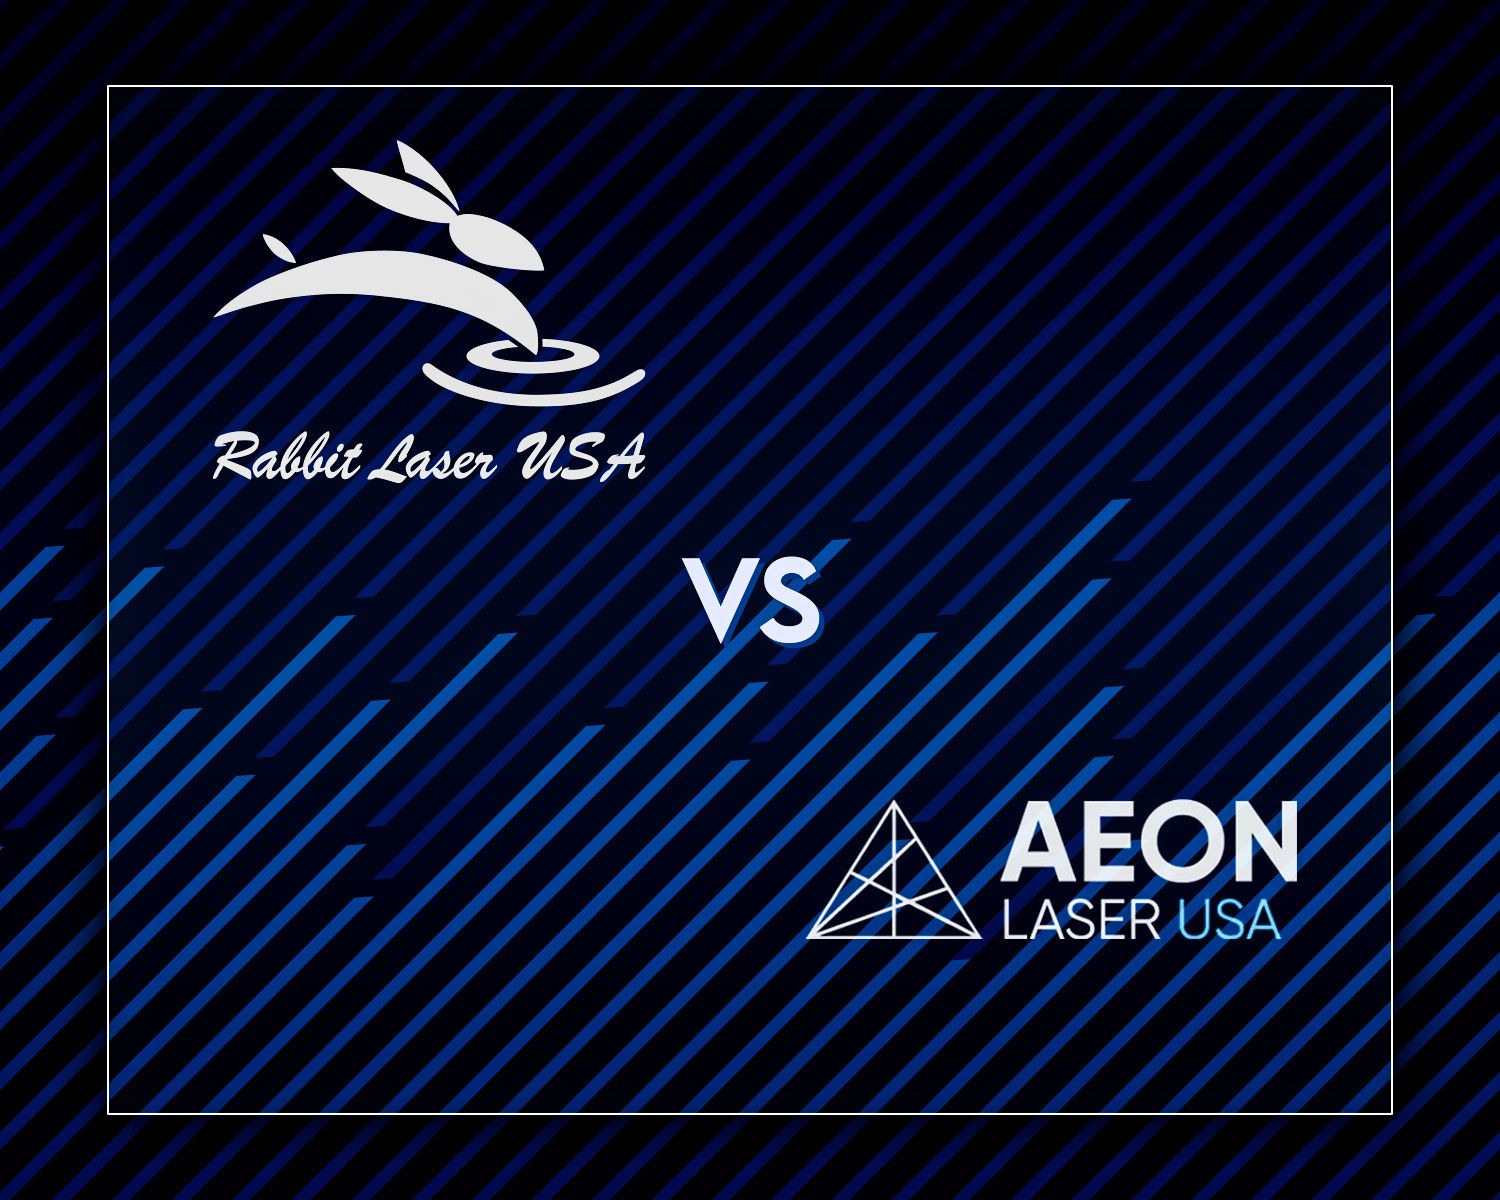 Rabbit Laser USA versus Aeon Laser USA